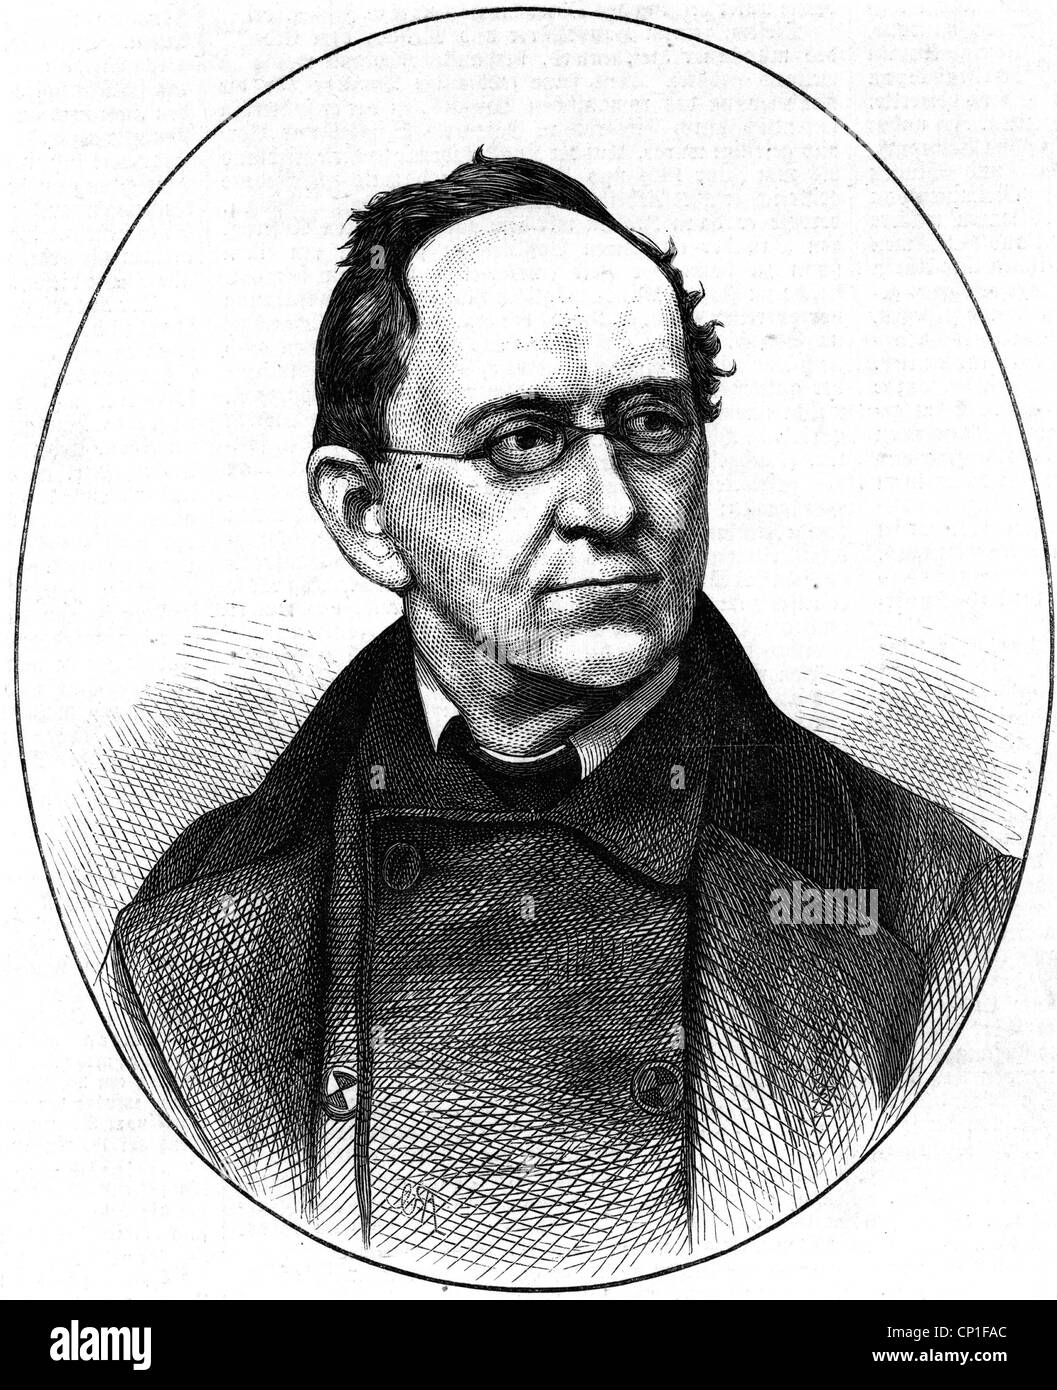 Ziebland, Georg Friedrich, 1.2.1800 - 24.1.1873, German architect, portrait, wood engraving, 19th century, Stock Photo